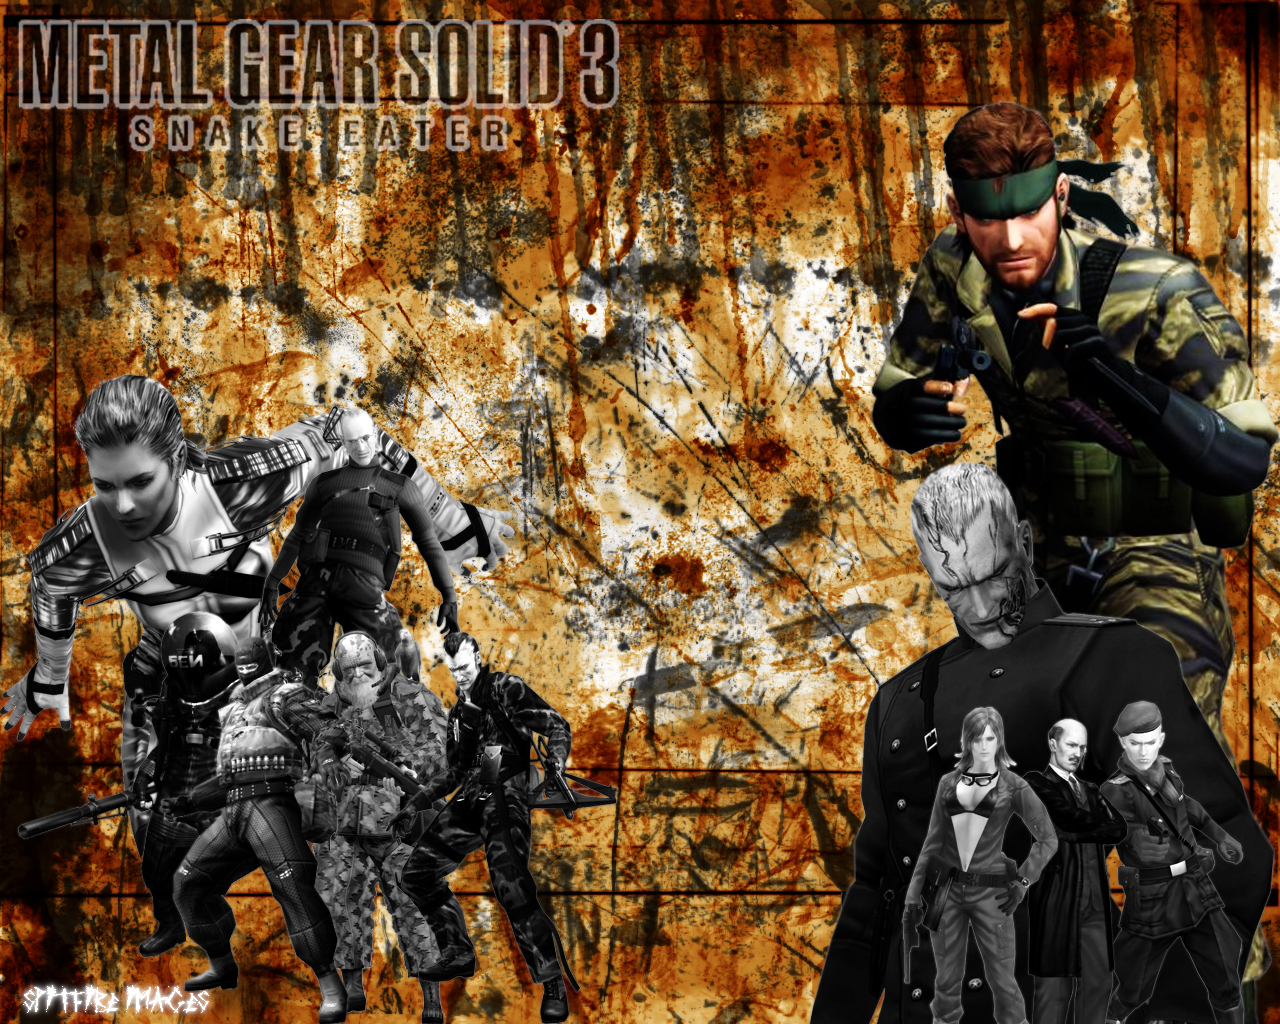 MGS 3: Snake Eater Wallpaper by Spitfire666xXxXx on DeviantArt